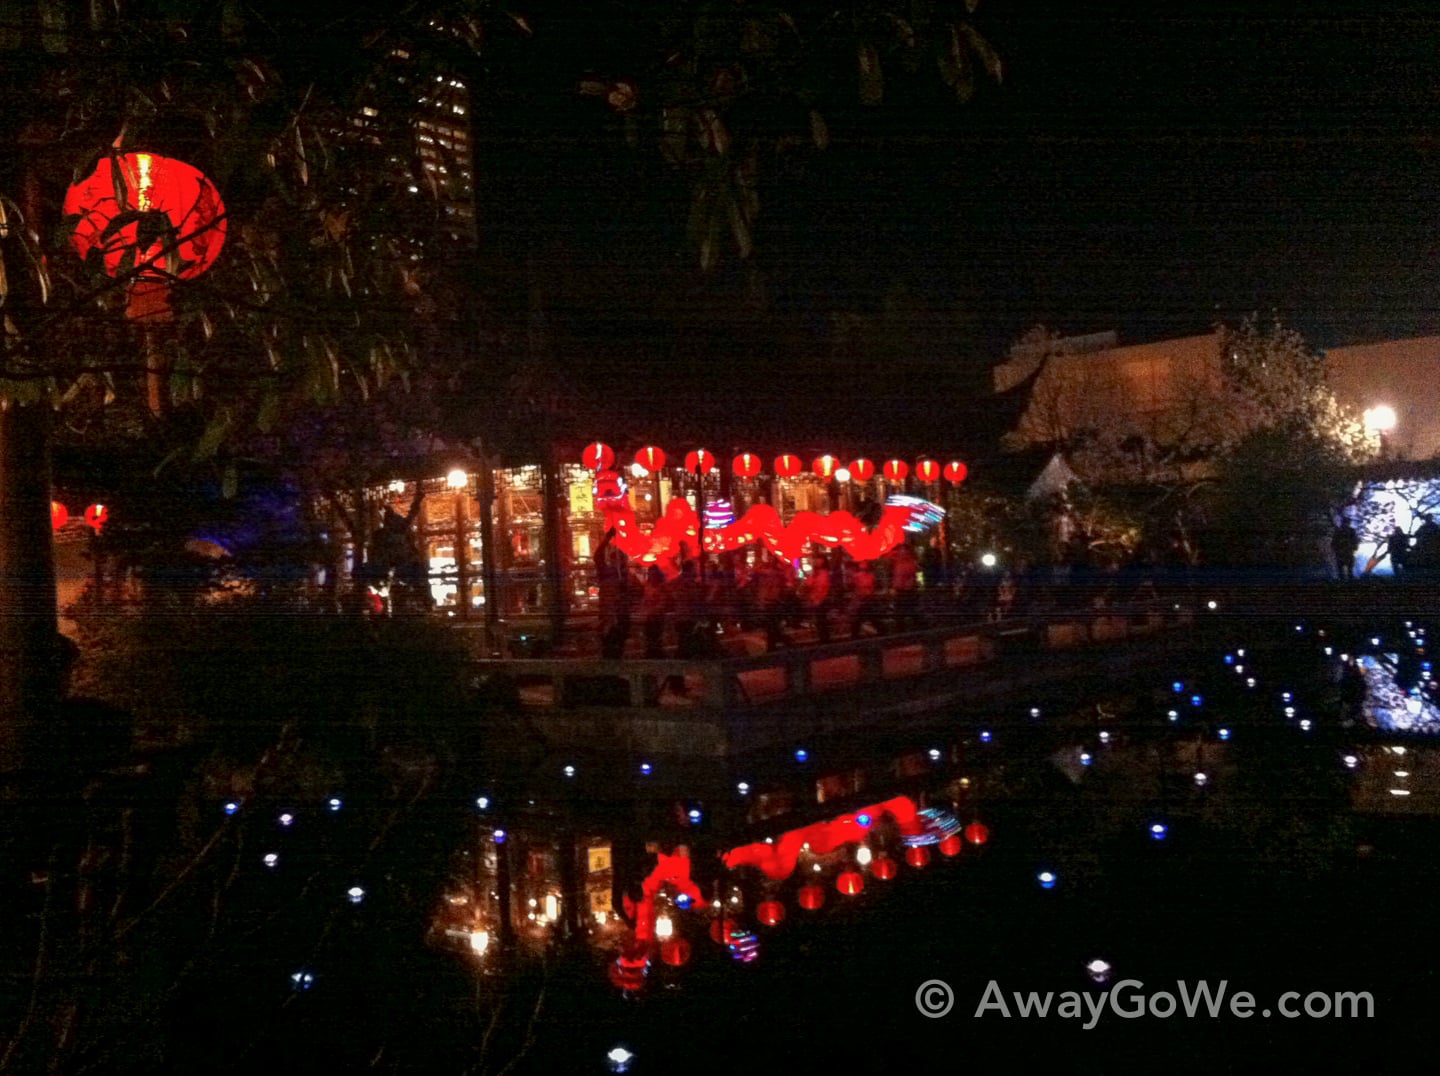 Lan Su Chinese Garden in Portland Oregon by night with red lanterns